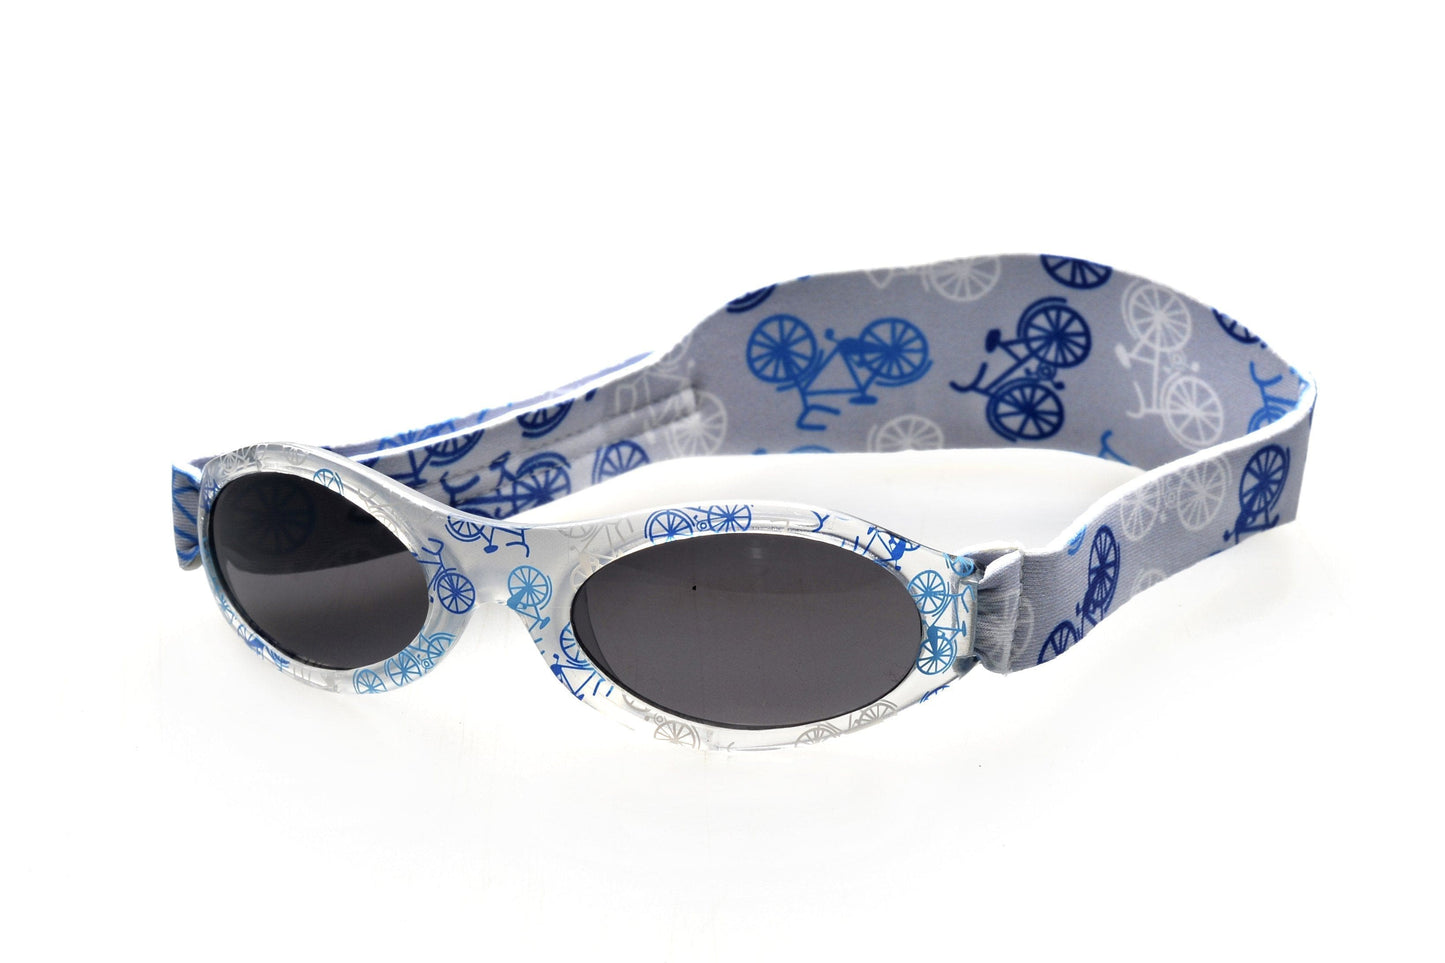 BANZ Sunglasses Baby Sunglasses - Bubzee Polarized Wrap Around Bicycle Ride